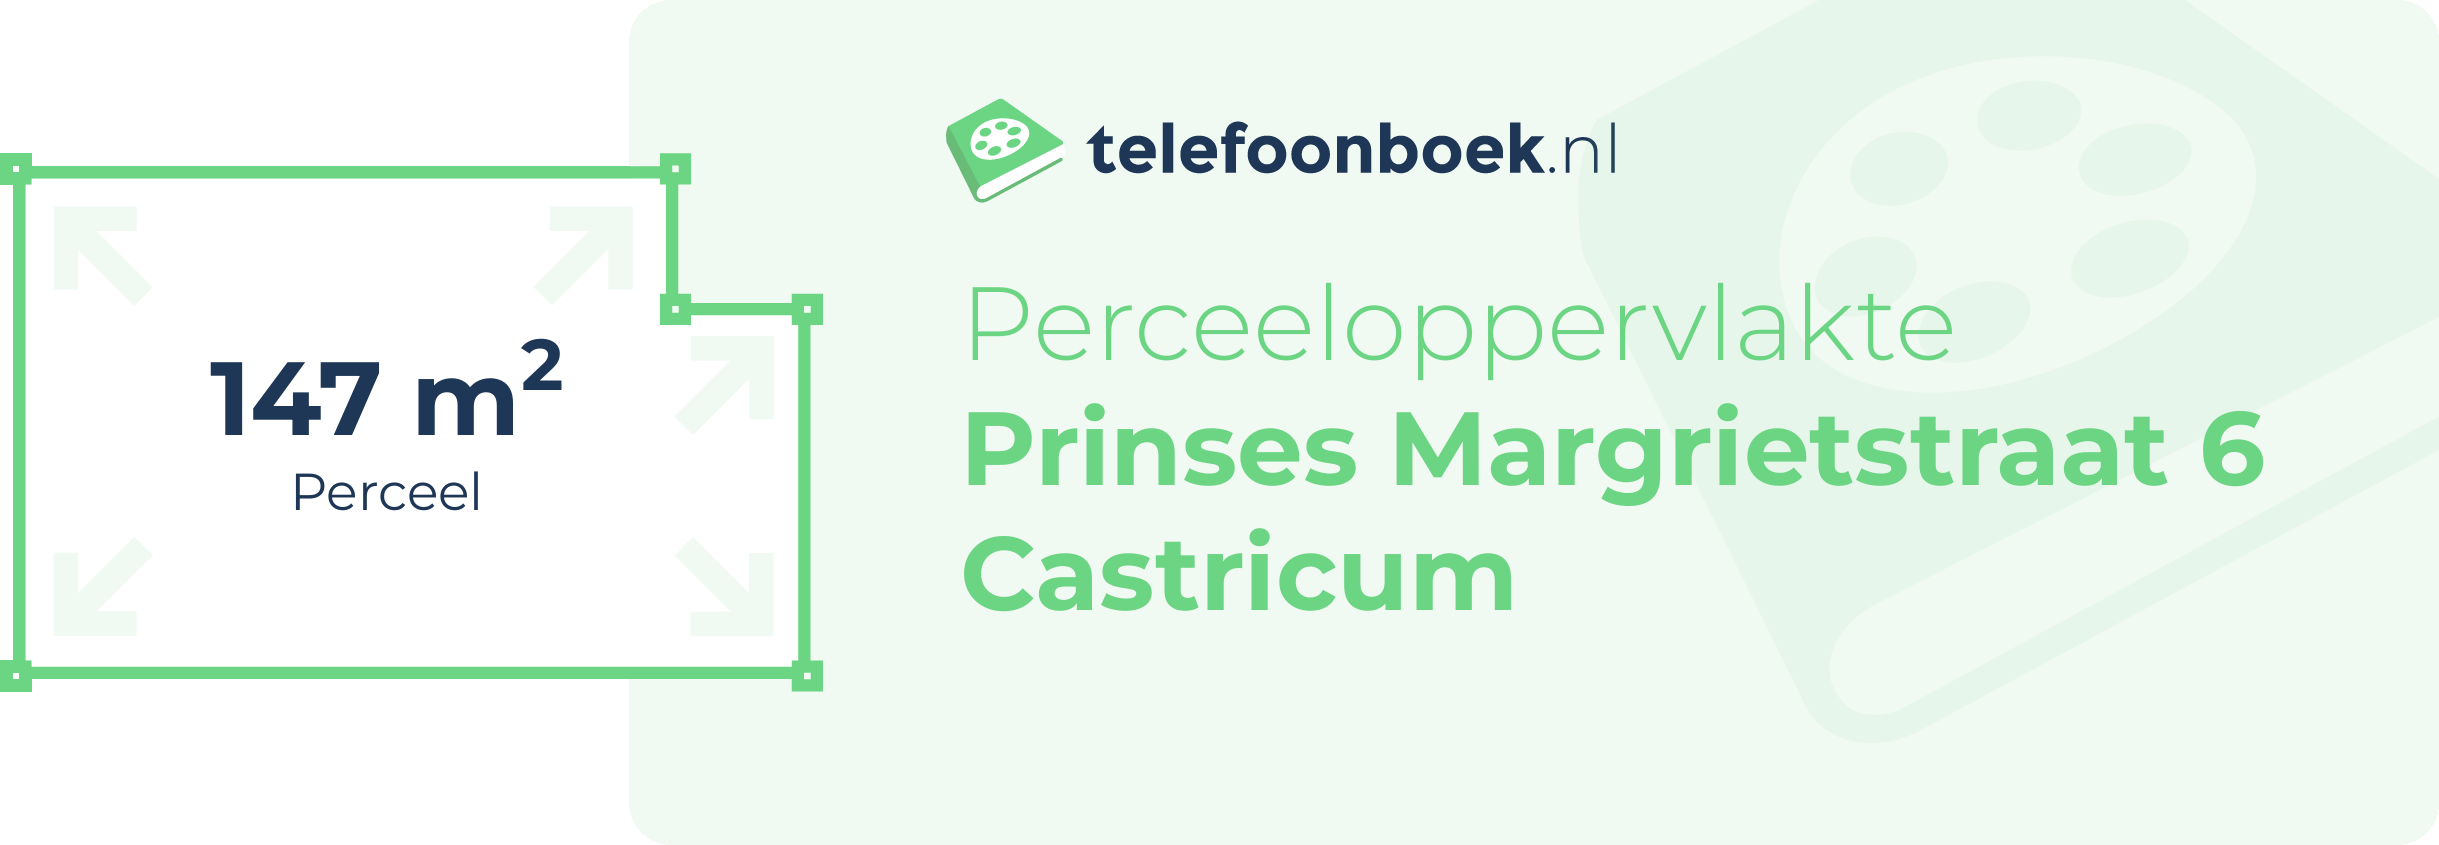 Perceeloppervlakte Prinses Margrietstraat 6 Castricum